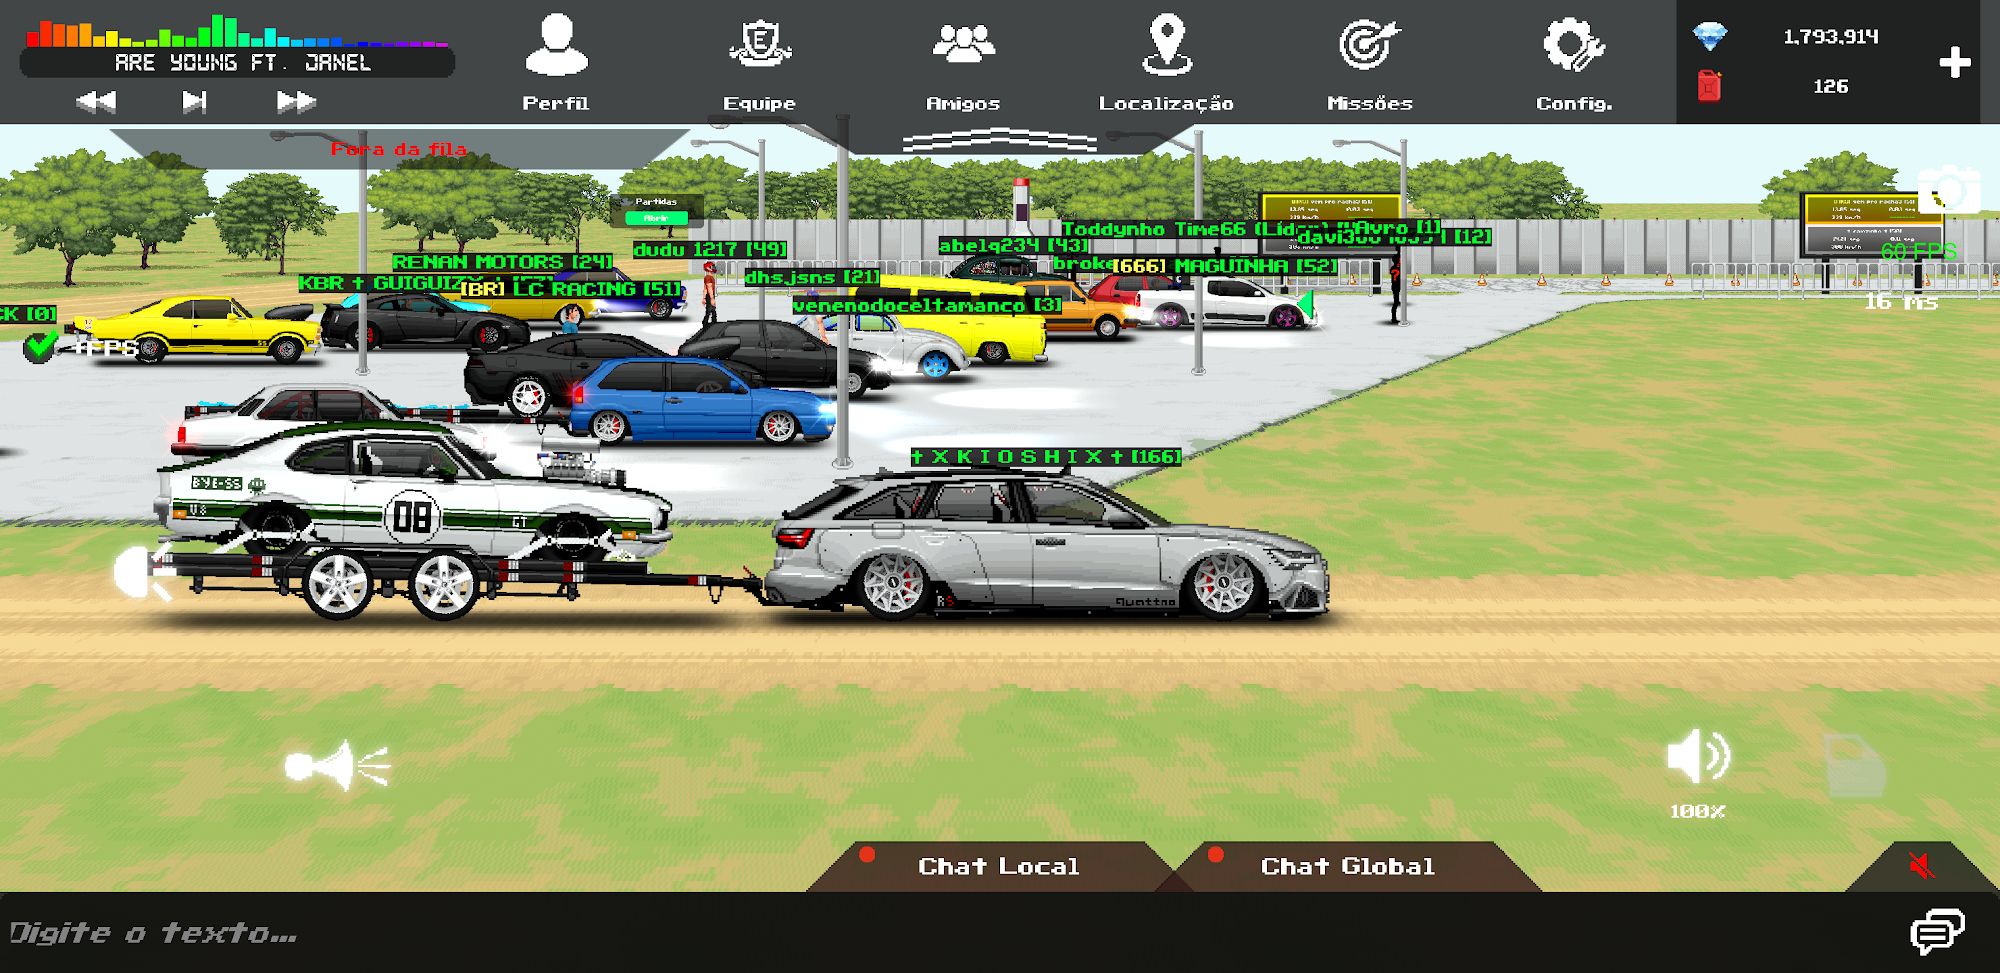 Estilo BR - Android game screenshots.